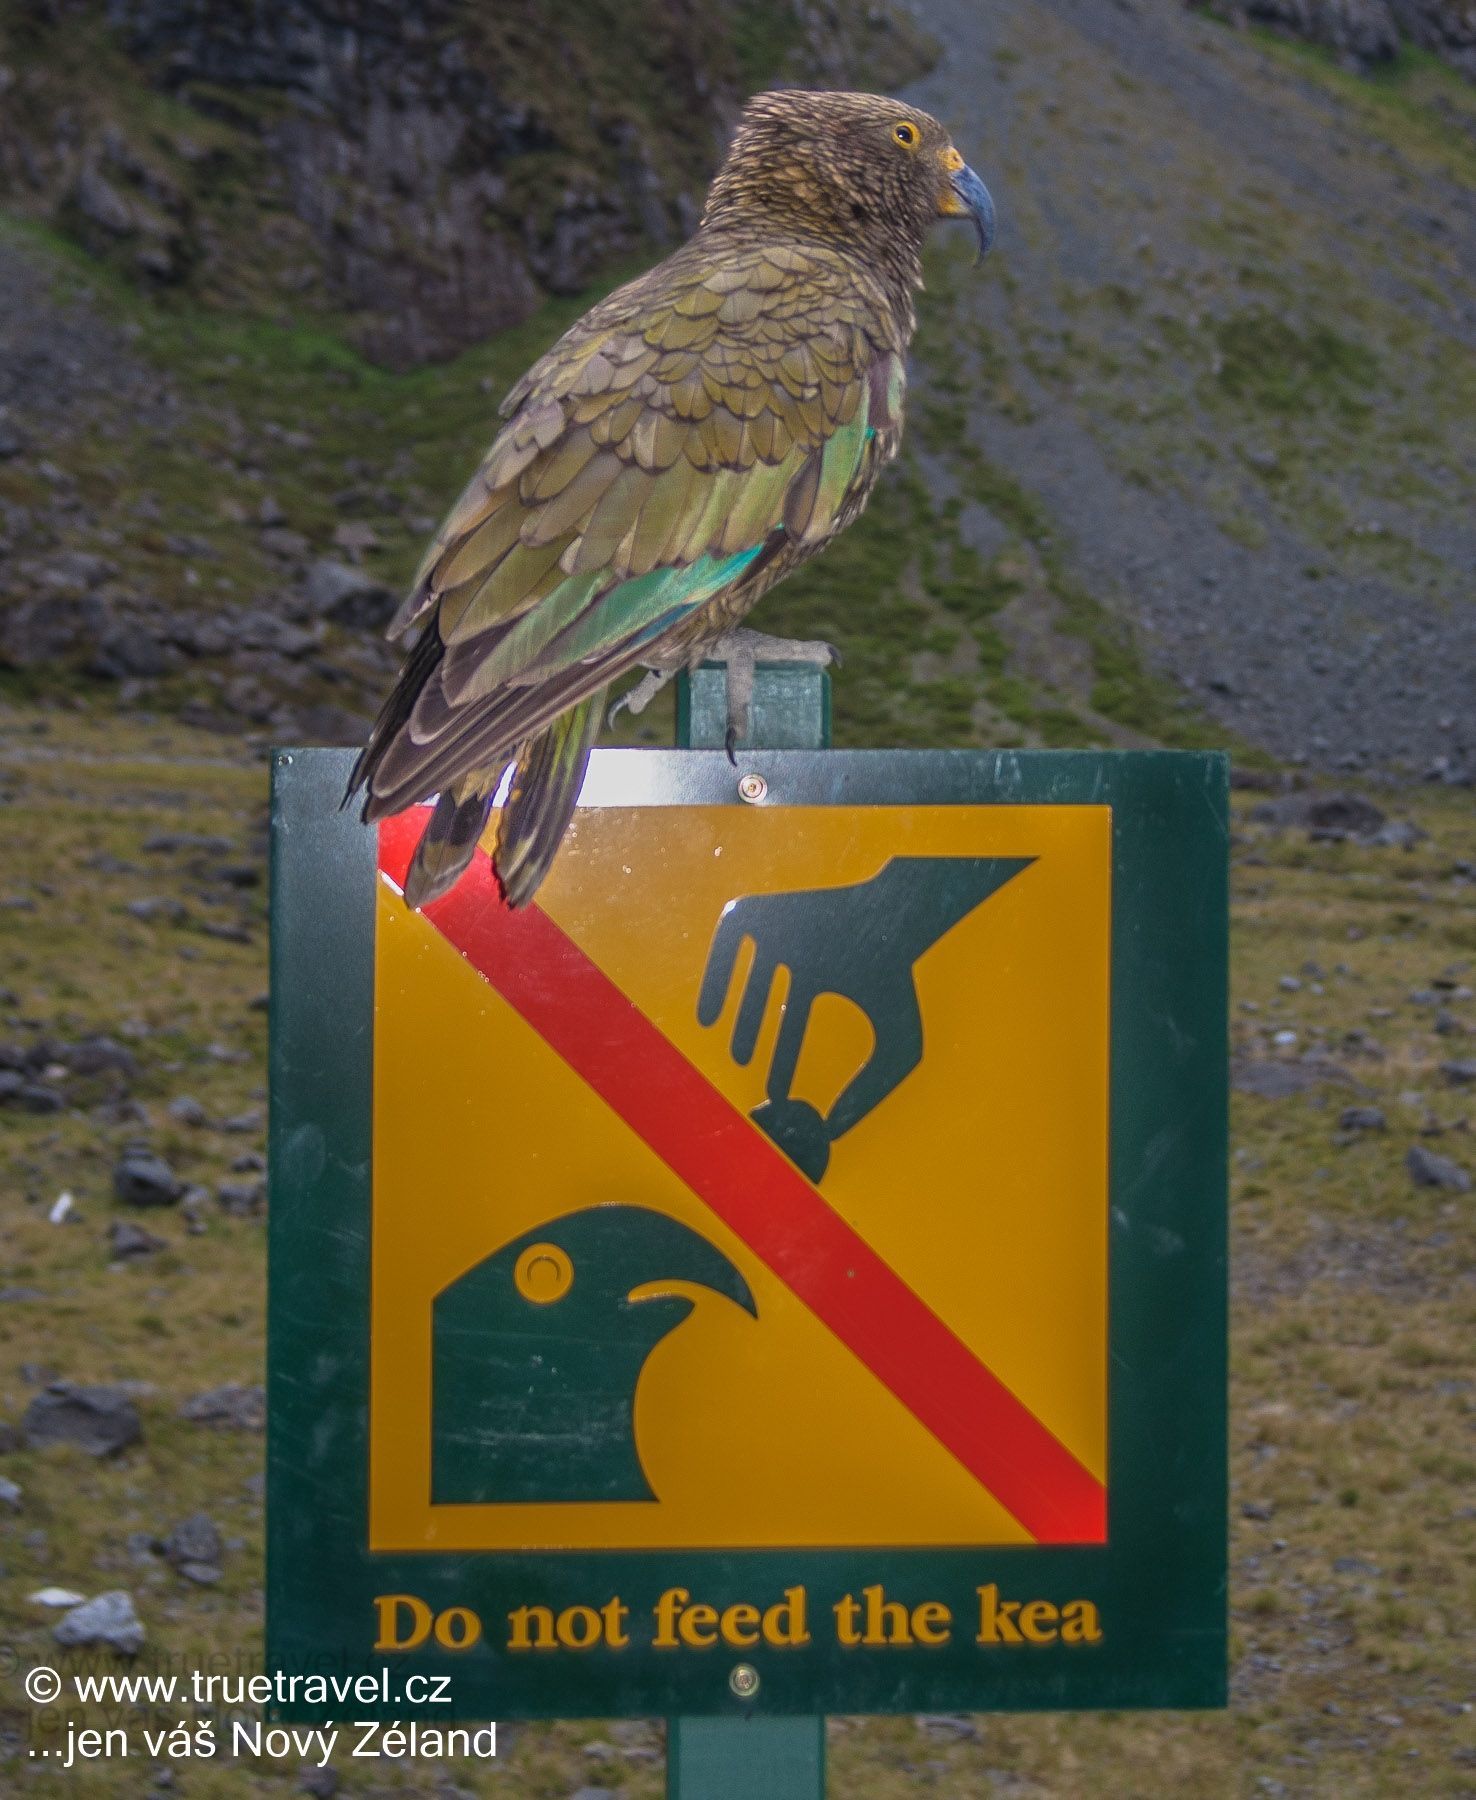 Papoušky kea nekrmit! Milford Road, Fiordland, Nový Zéland